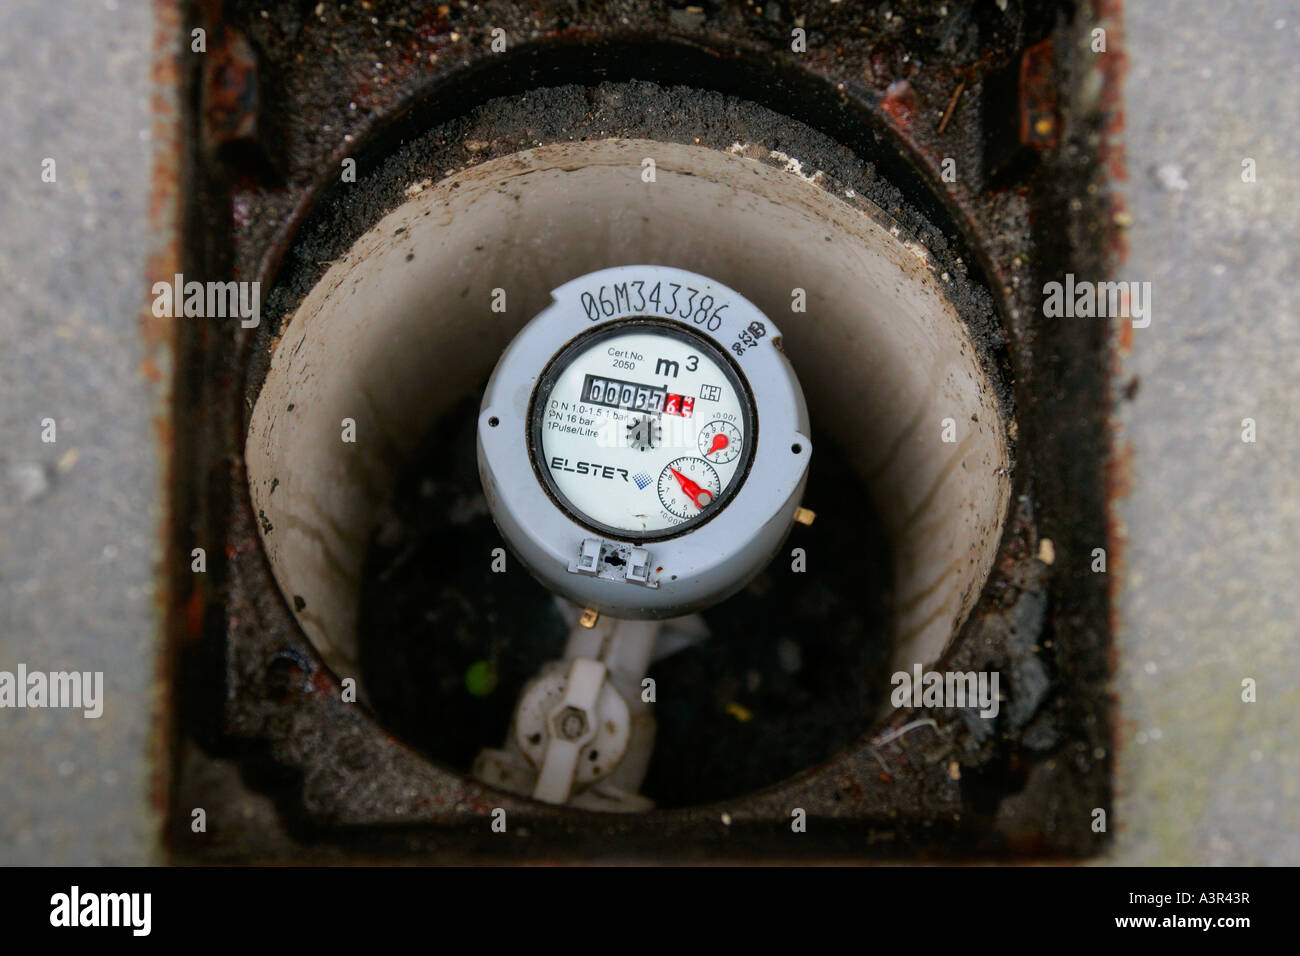 Domestic UK water meter. Stock Photo